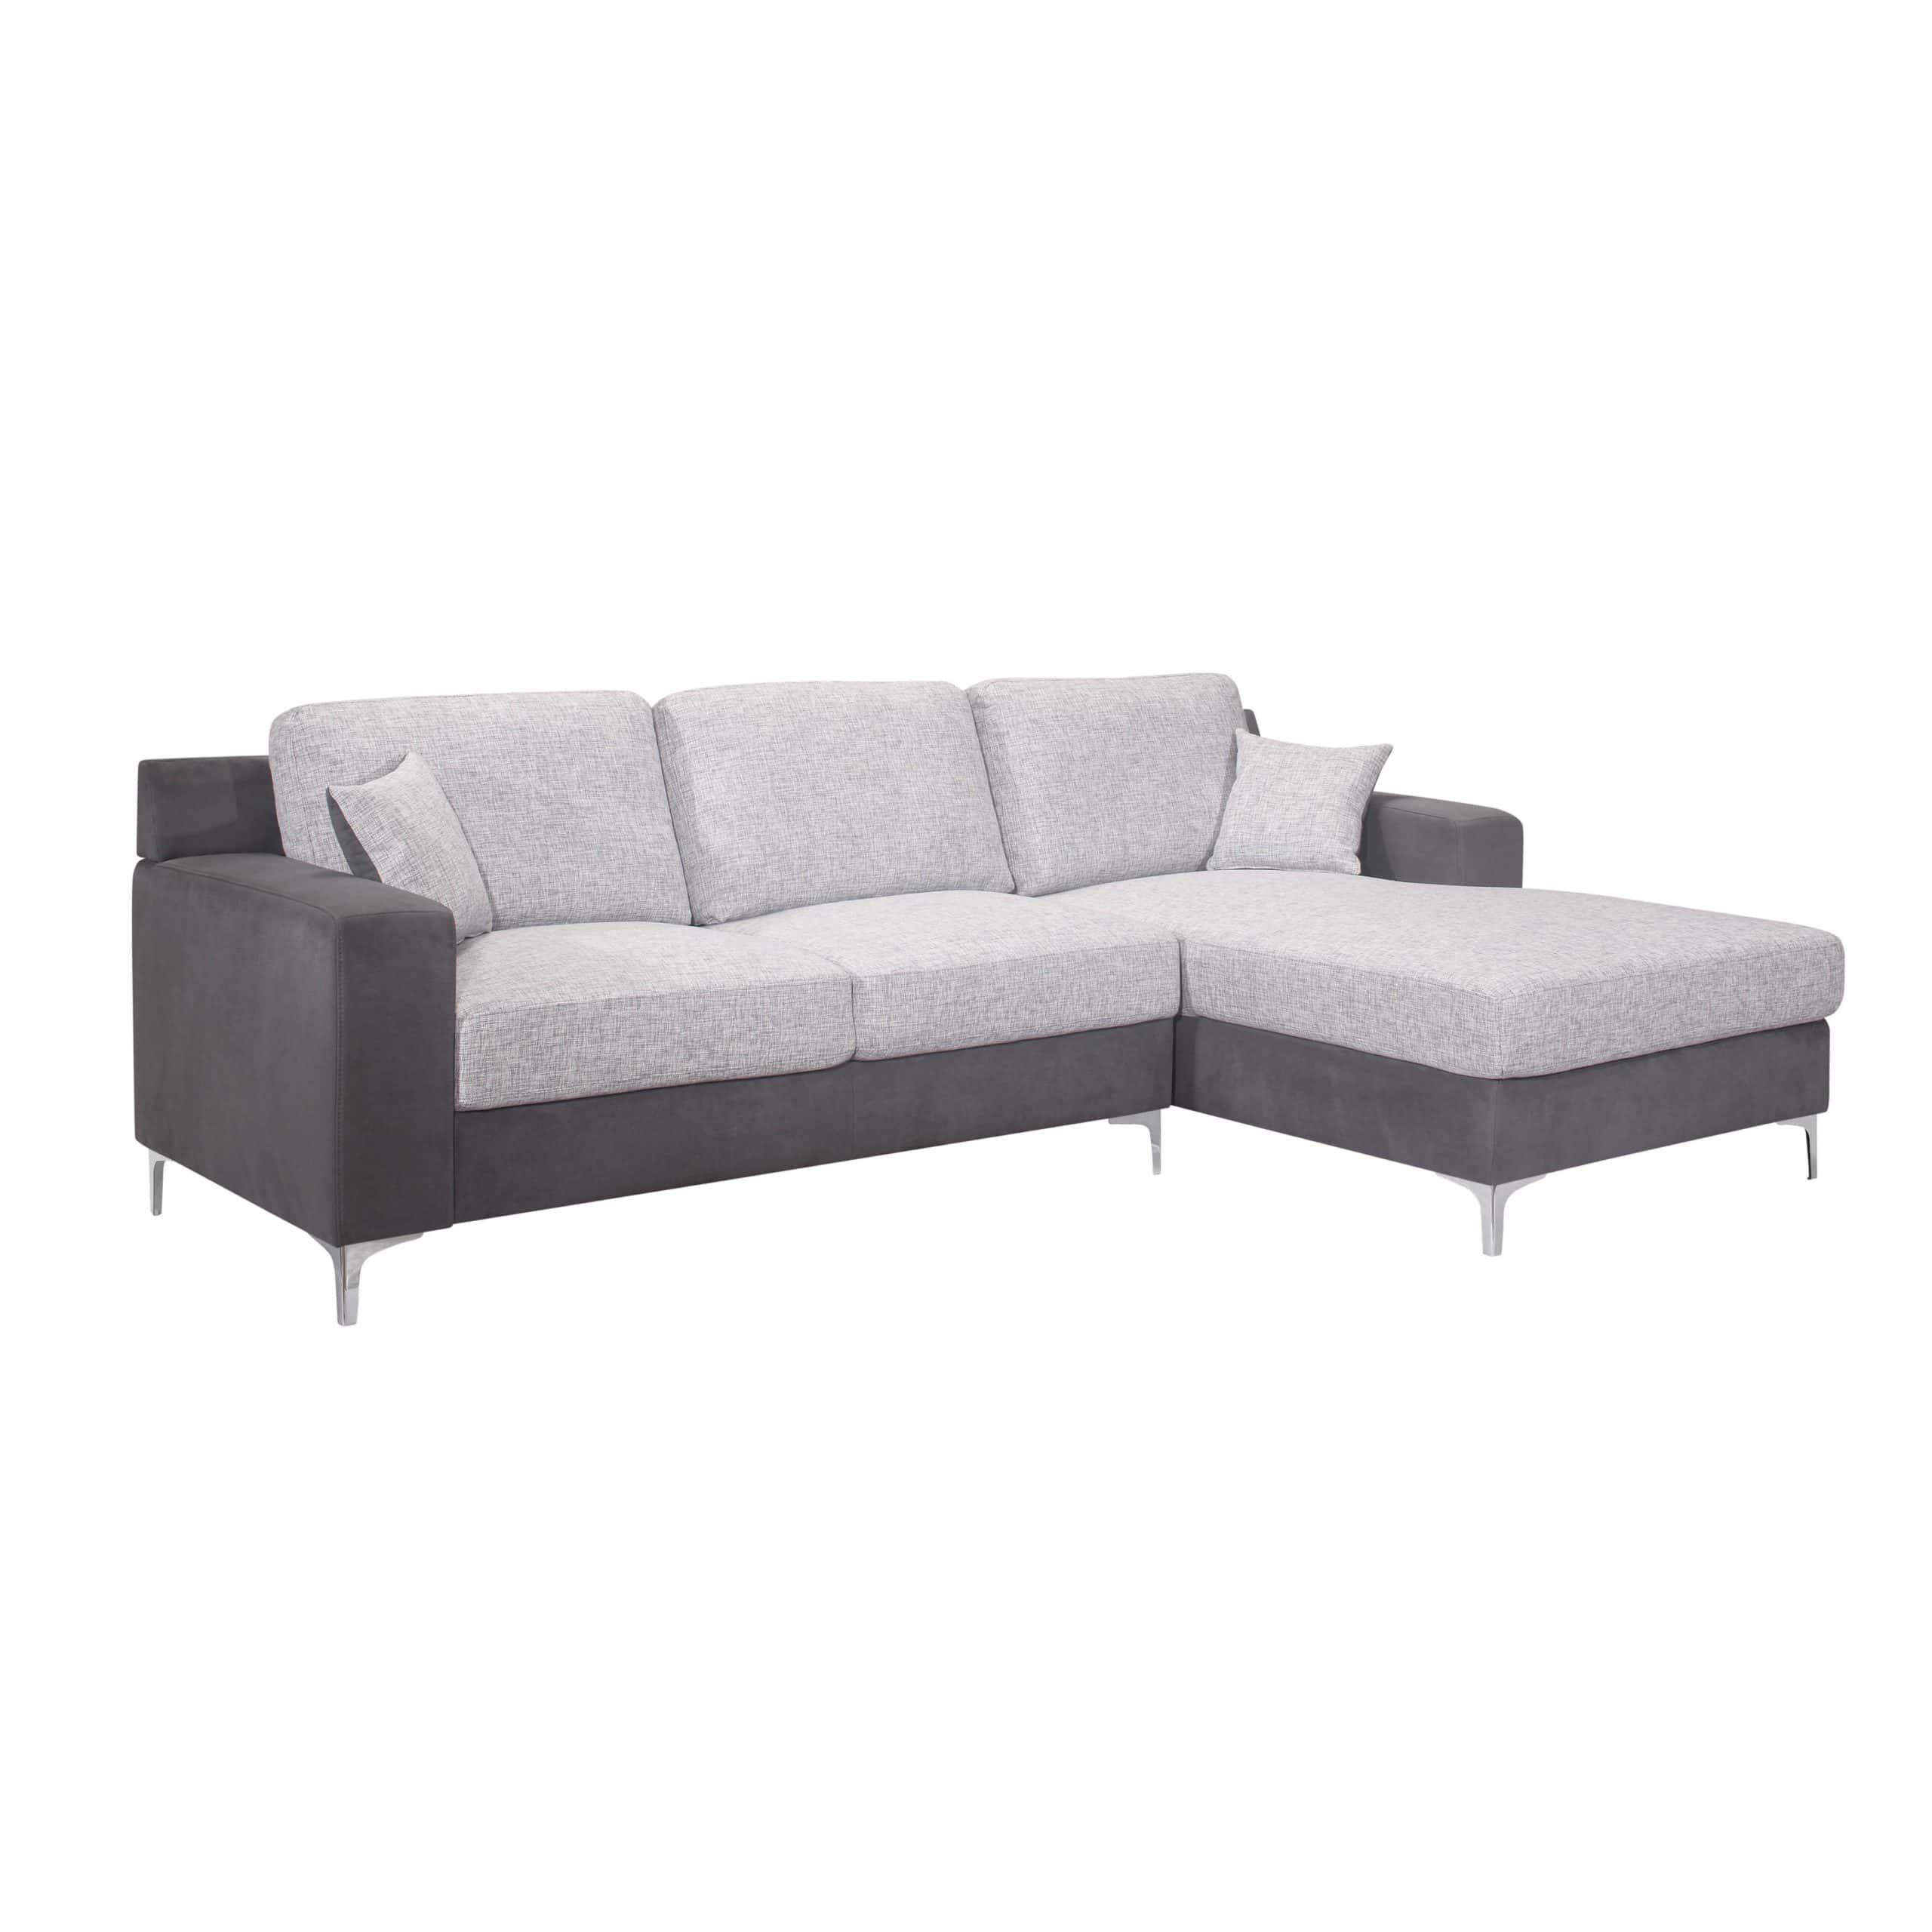 Contemporary Sectional Sofa U967 U967-GREY/DRK GREY-SECTIONAL in Light Grey, Dark Grey leather gel